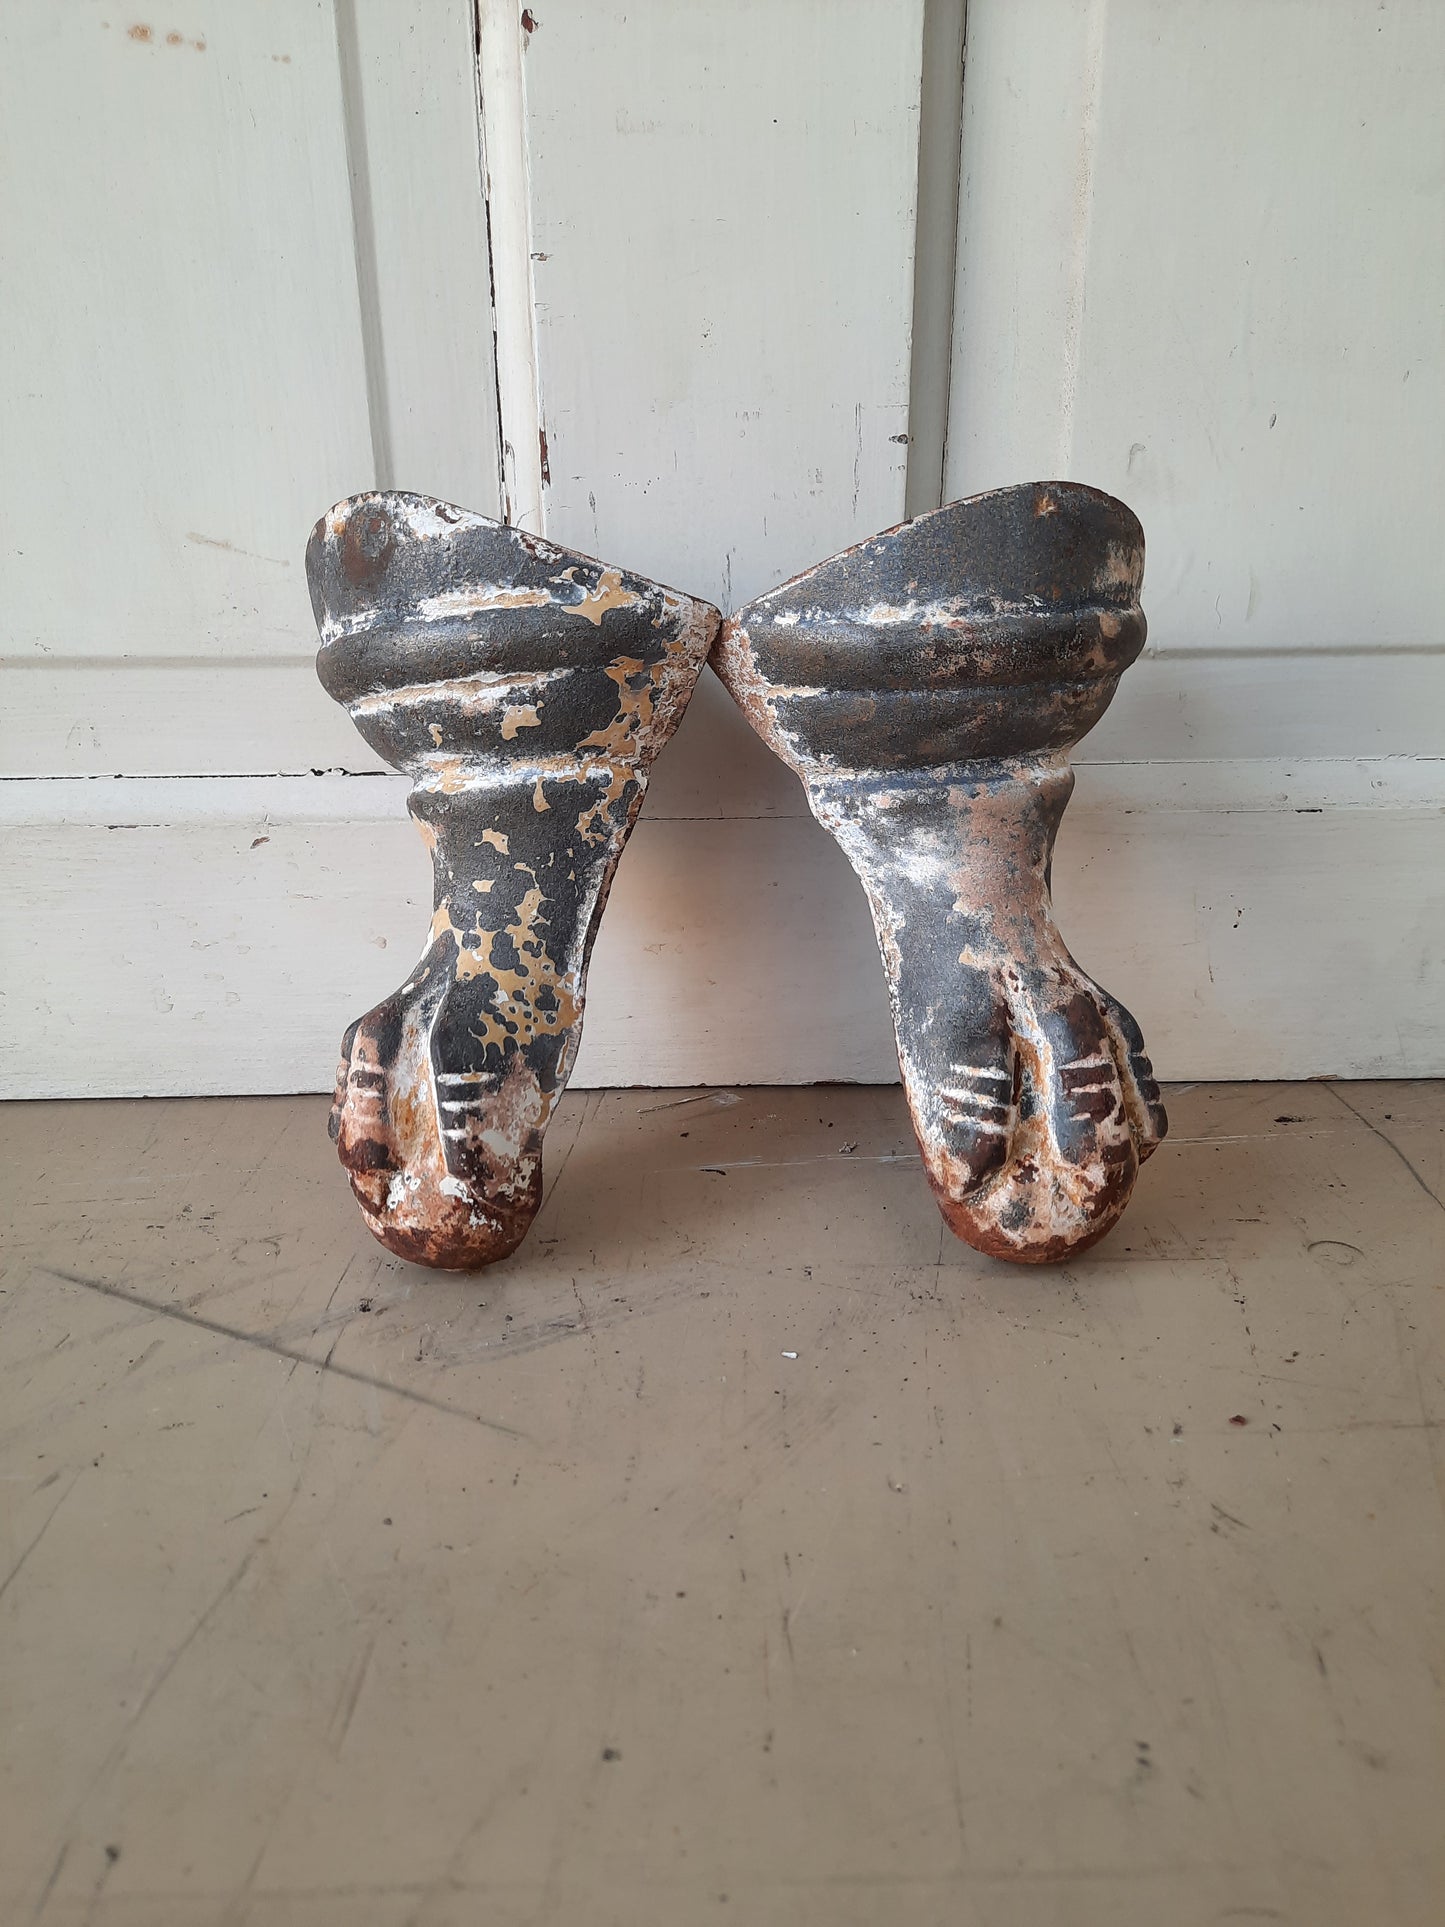 Antique Pair of Cast Iron Ball and Claw Tub Feet, Claw Design Bathtub Feet